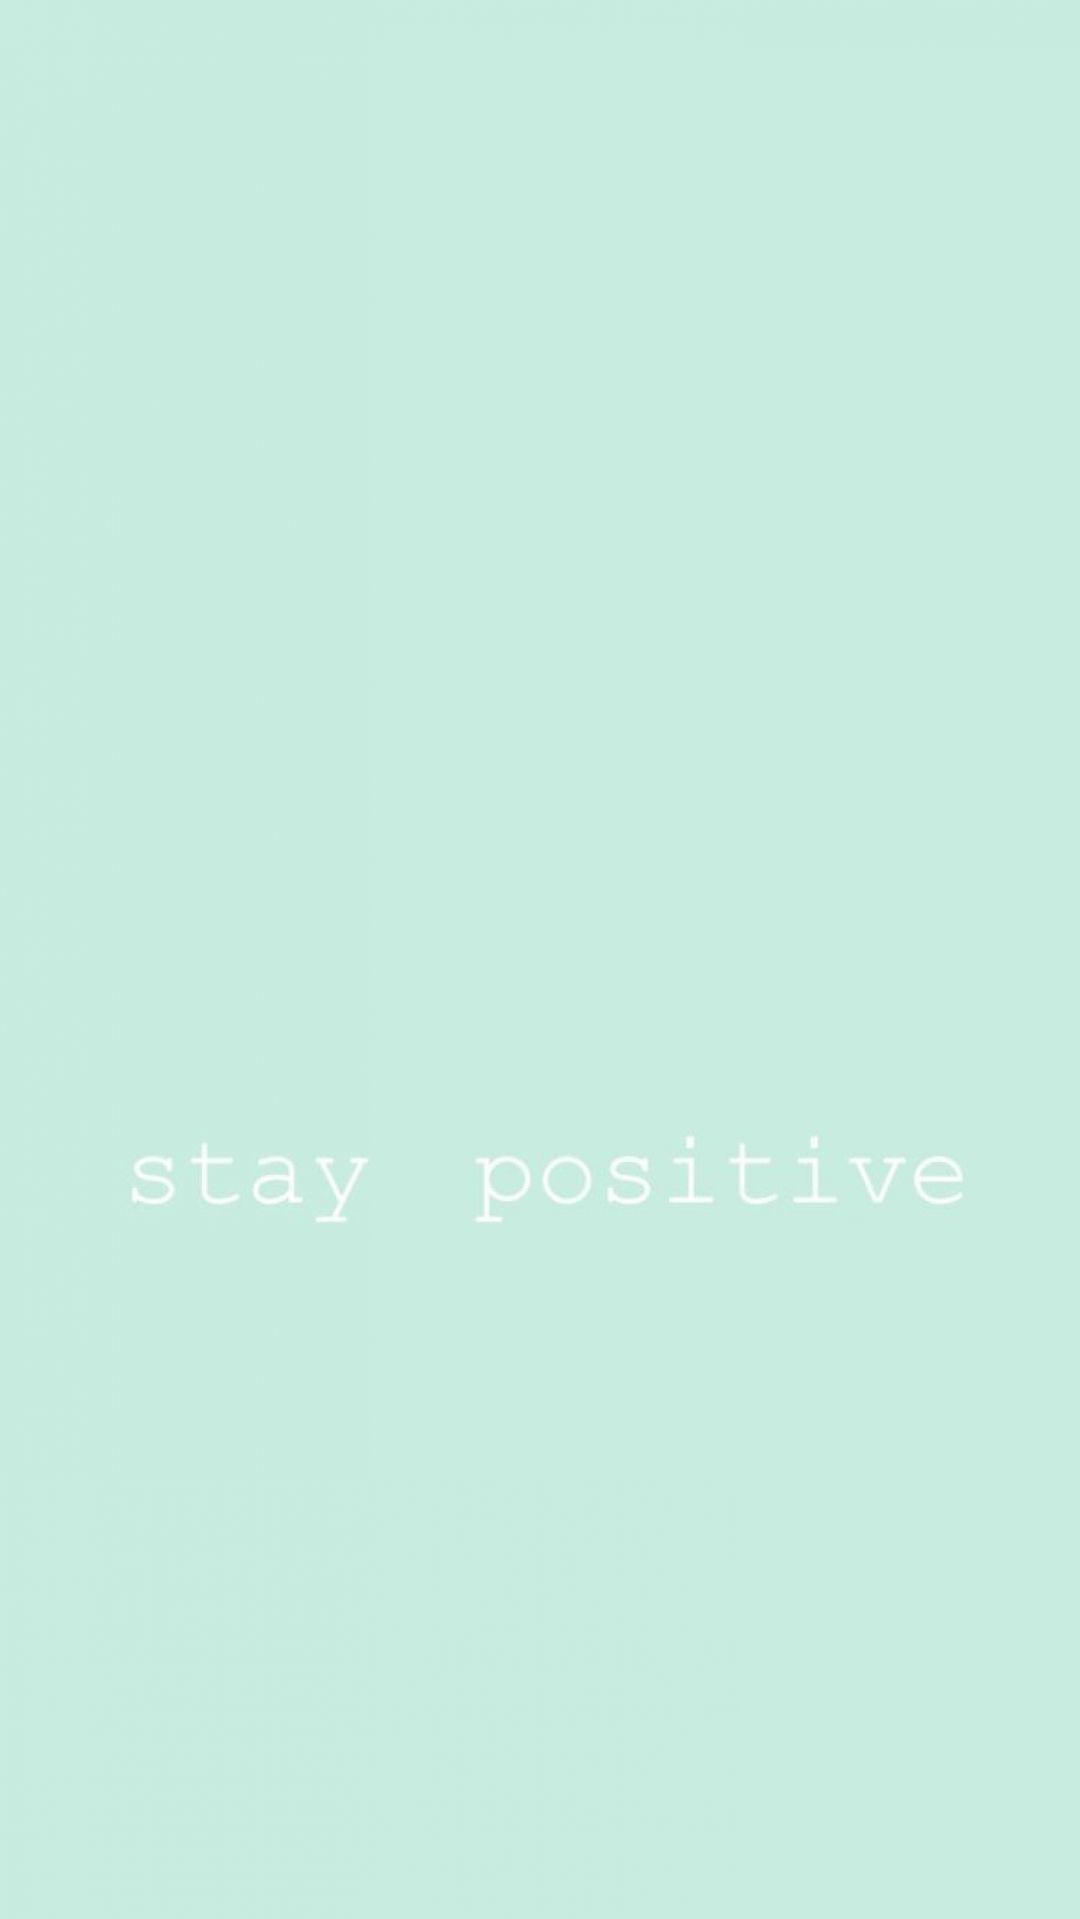 Stay positive - Mint green, positivity